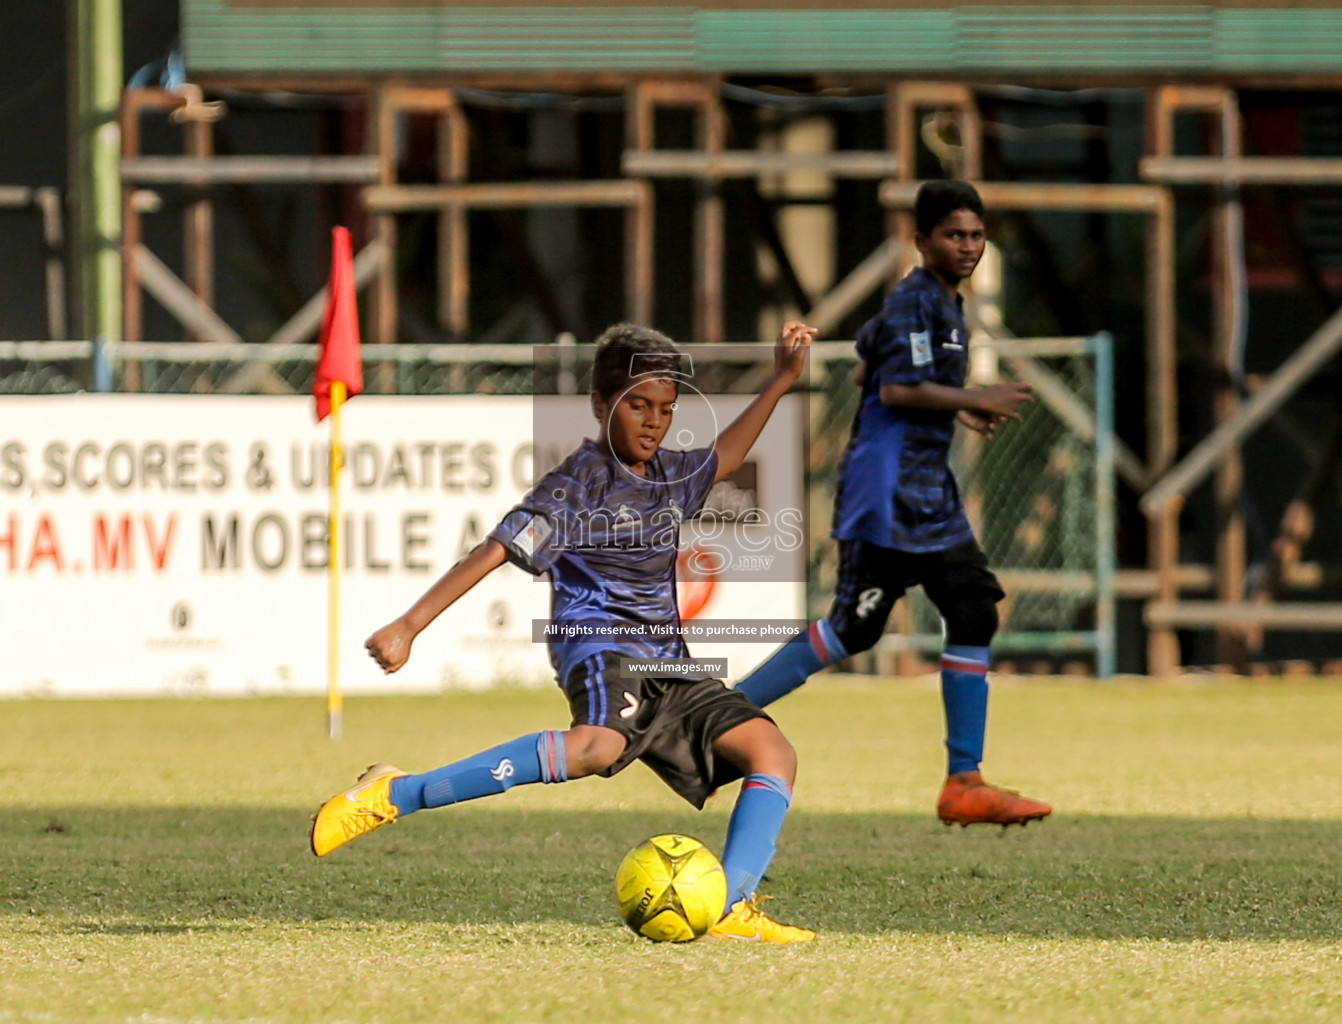 Dharumavantha School vs LH.EDU.CENTRE in MAMEN Inter School Football Tournament 2019 (U13) in Male, Maldives on 15th April 2019